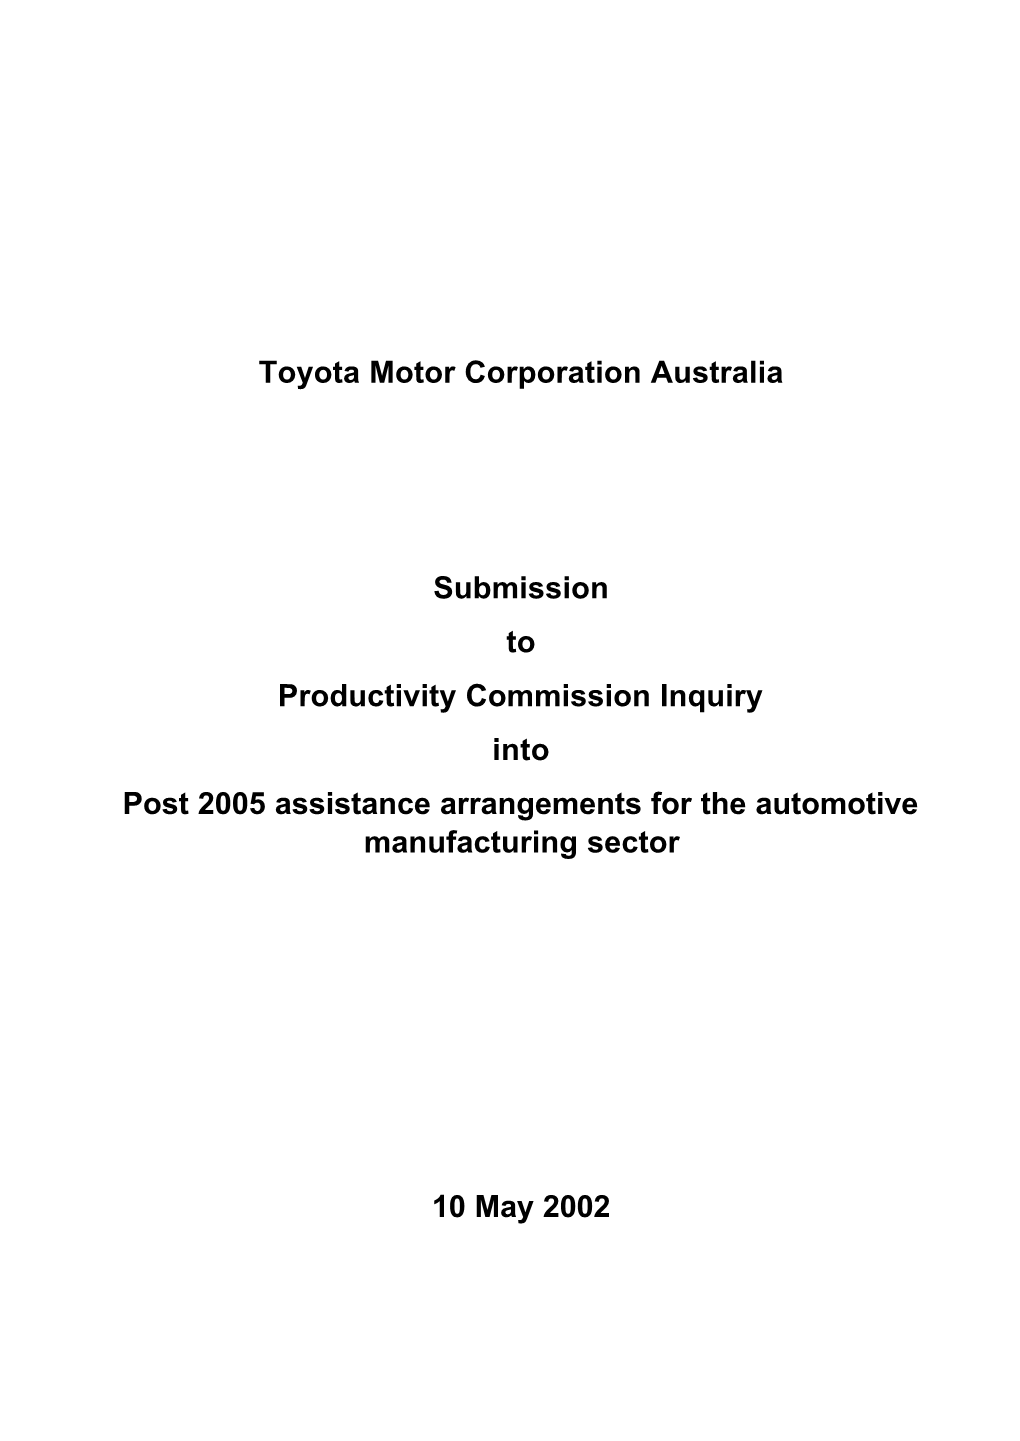 Toyota Motor Corporation Australia Submission to Productivity